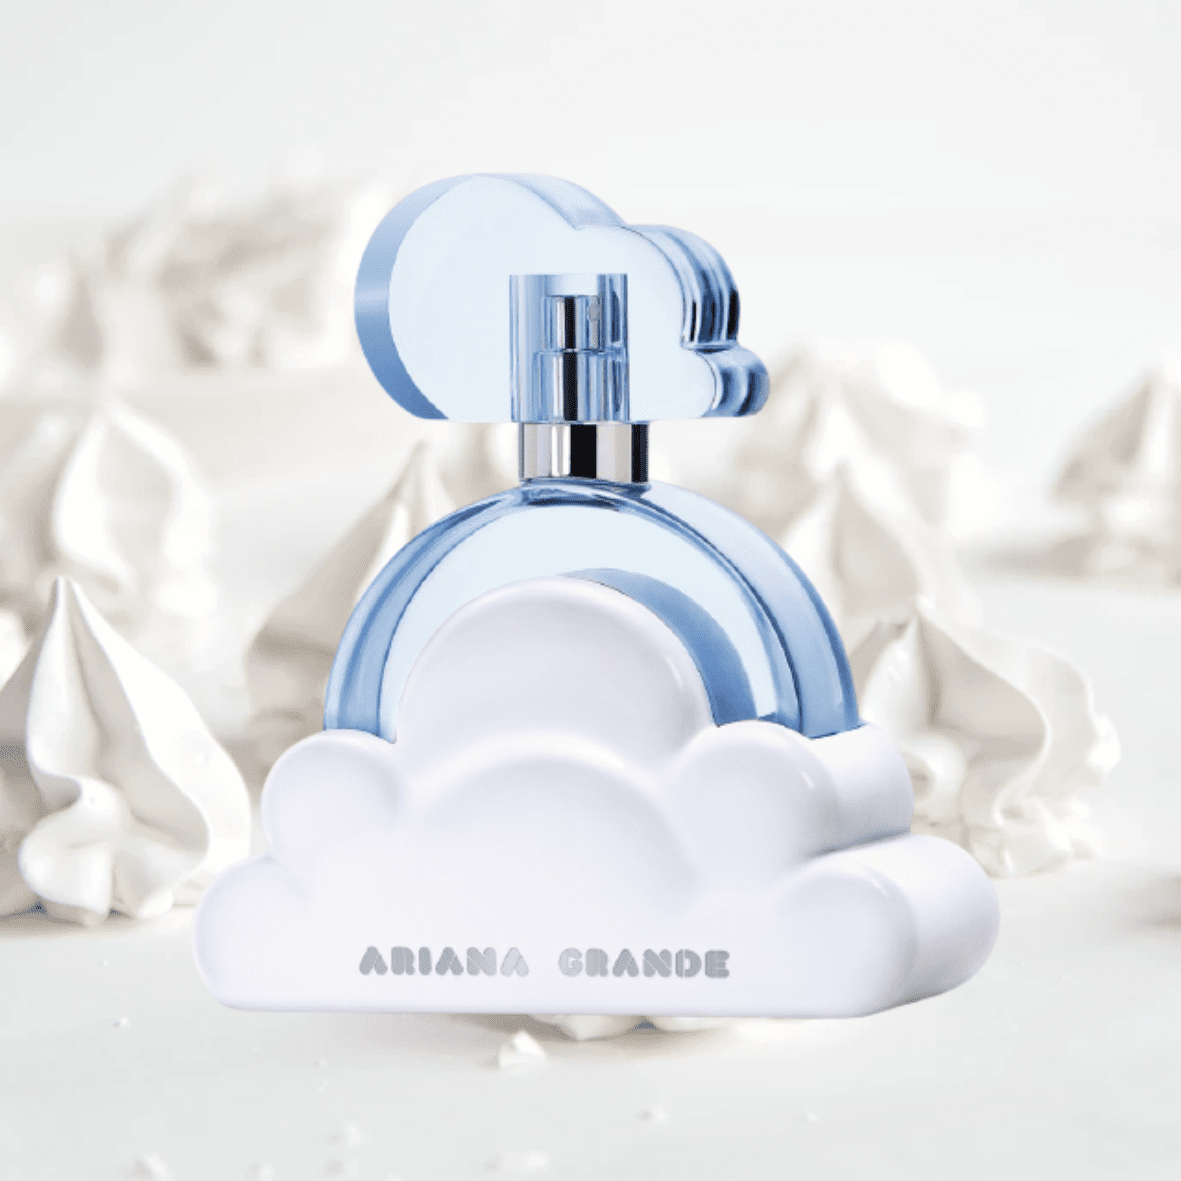 Ariana-Grande-Cloud EDV